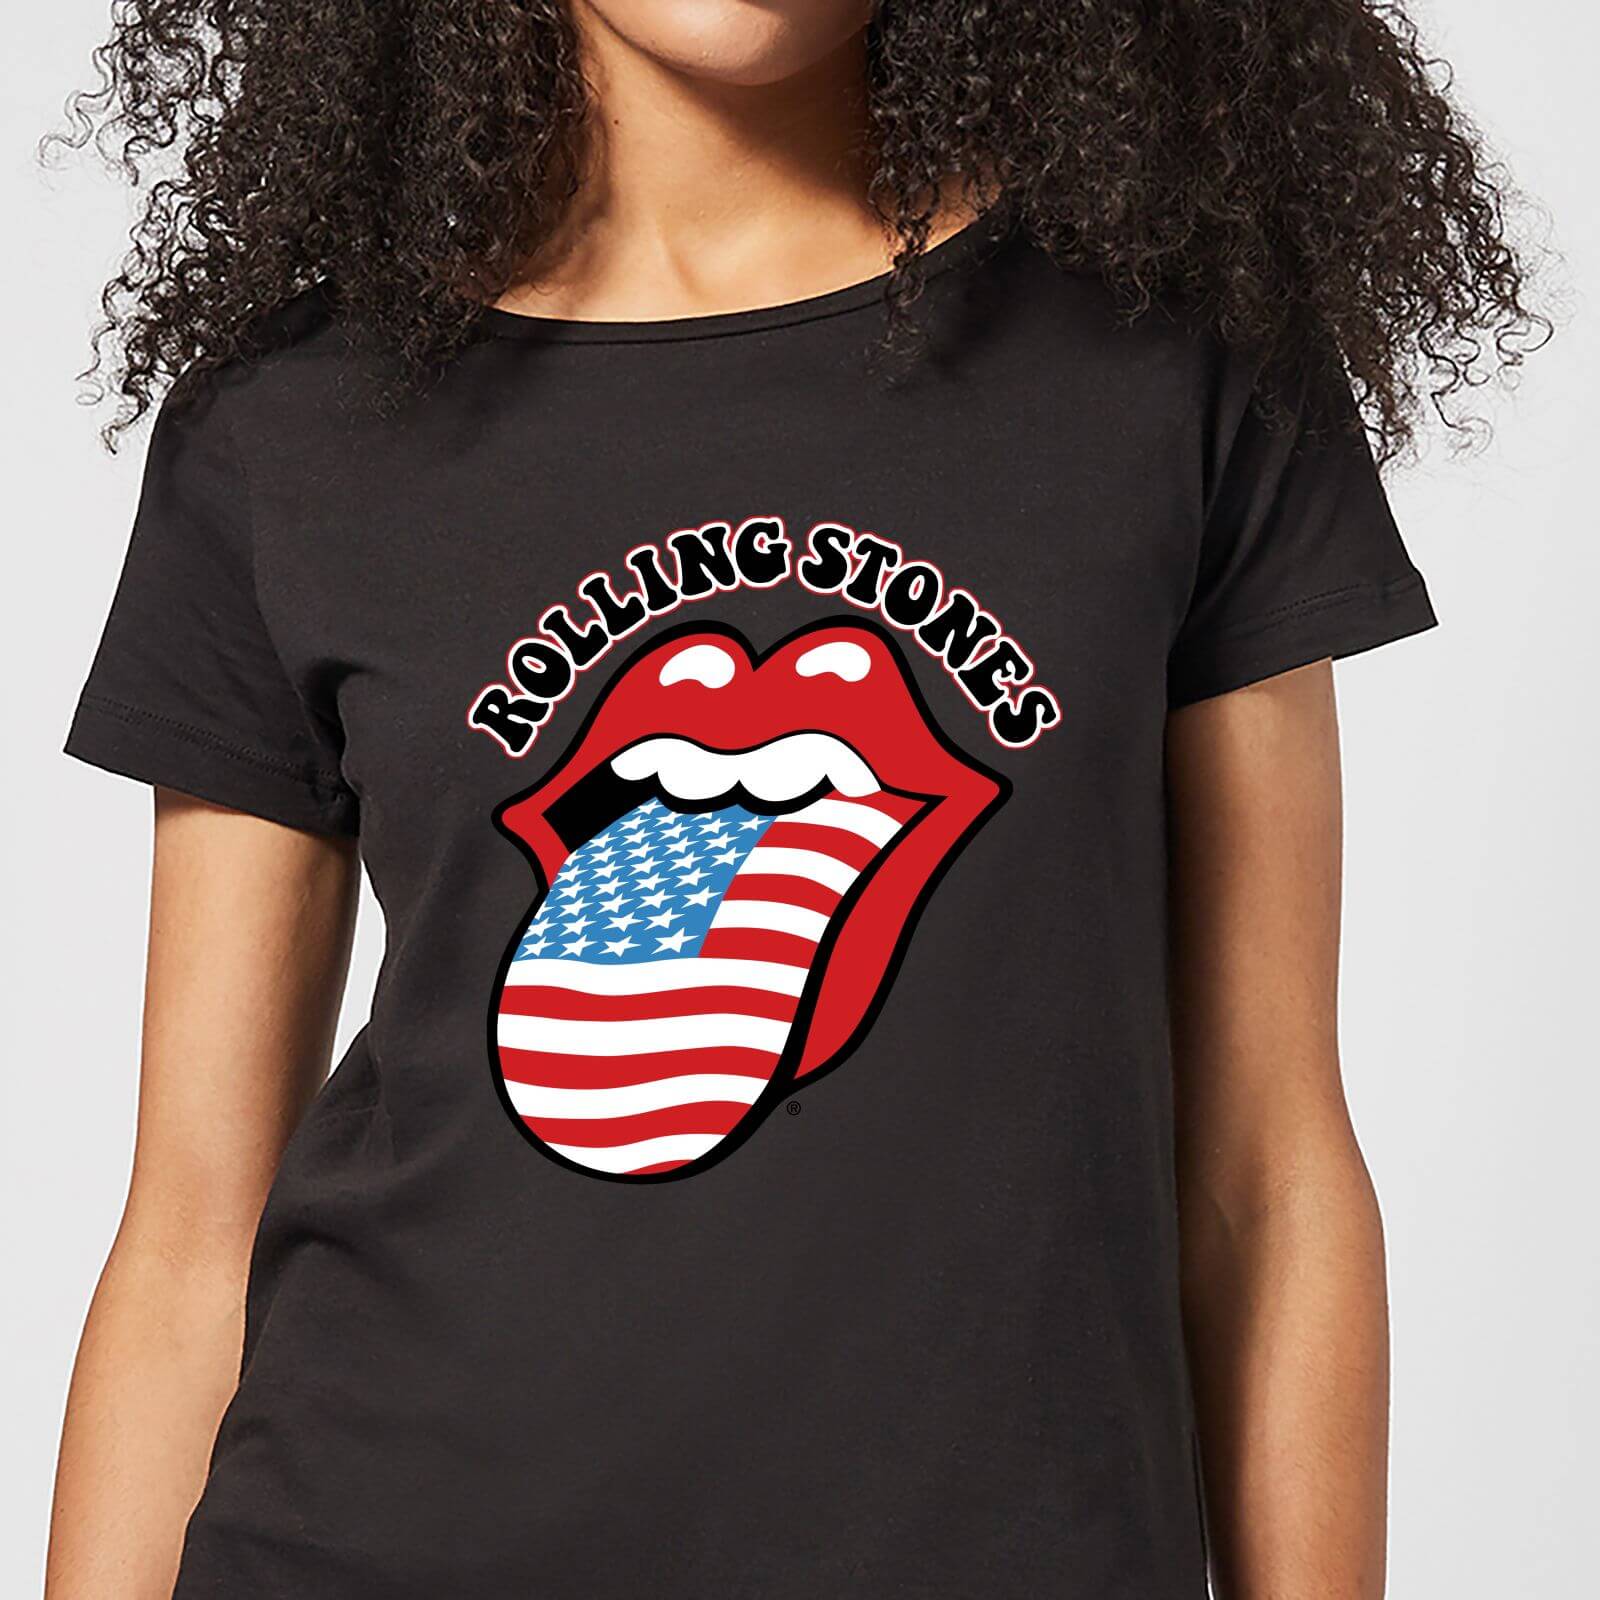 Rolling Stones US Flag Women's T-Shirt - Black - L - Black